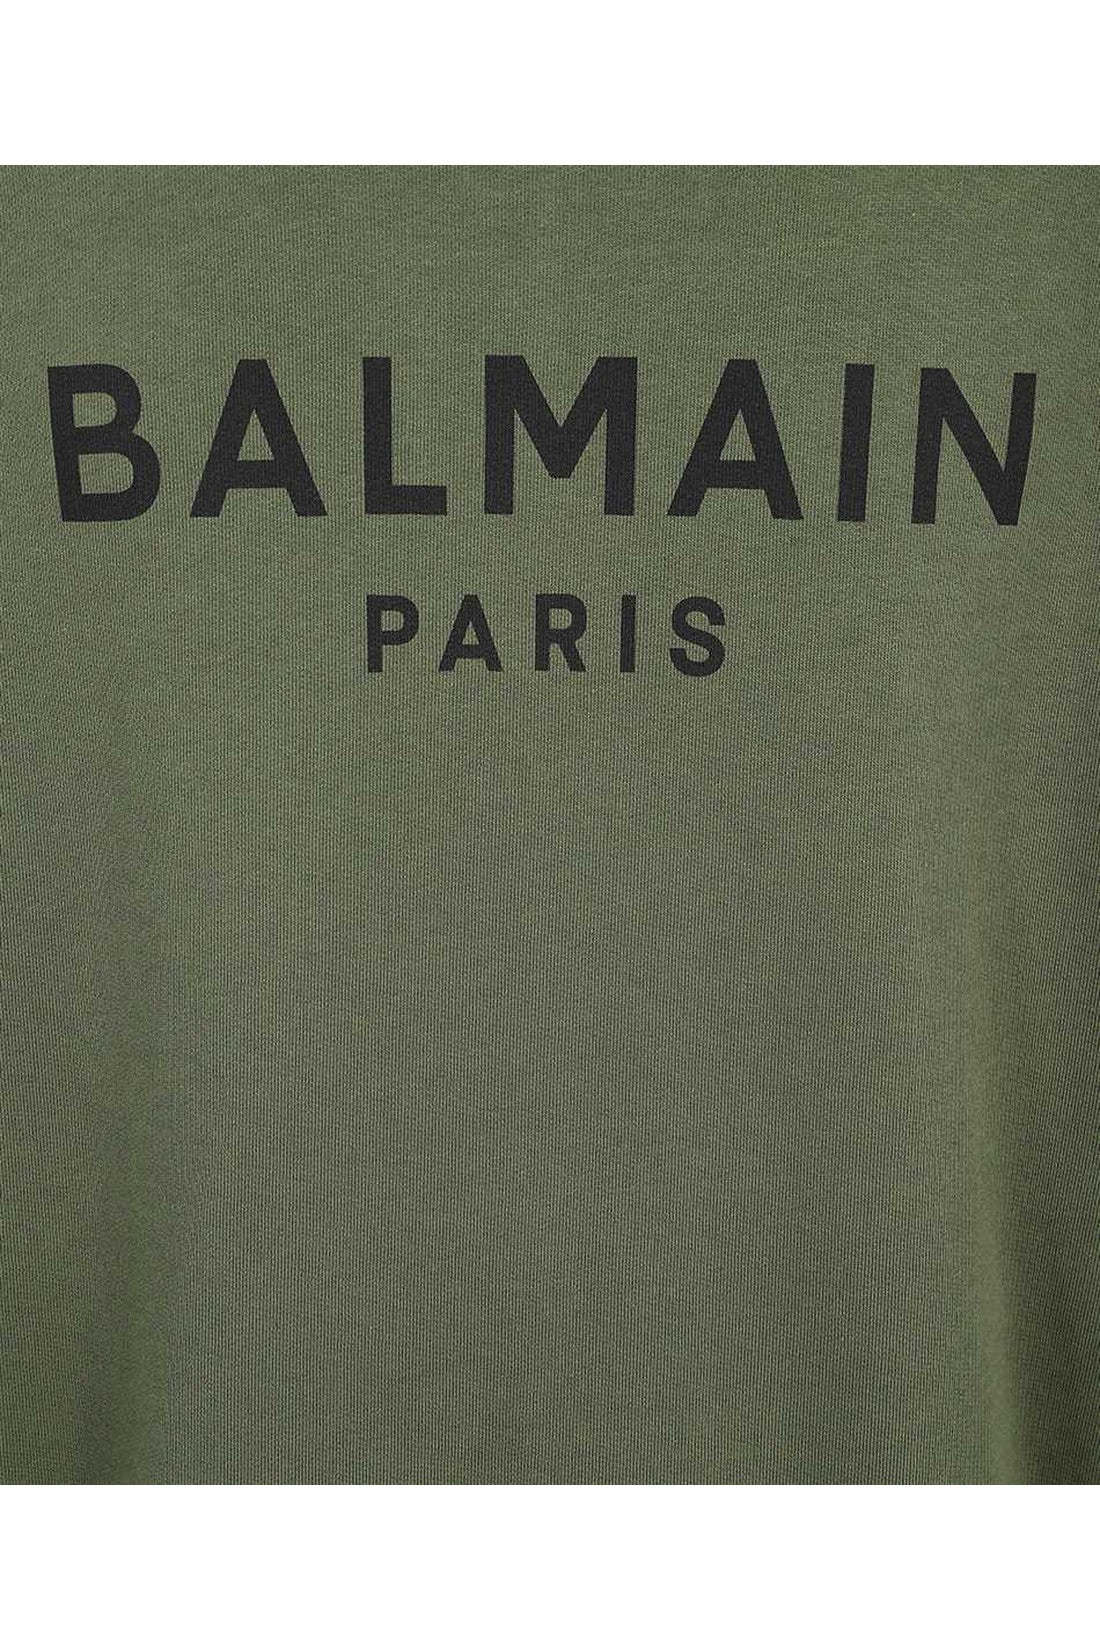 Balmain-OUTLET-SALE-Cotton full-zip sweatshirt-ARCHIVIST